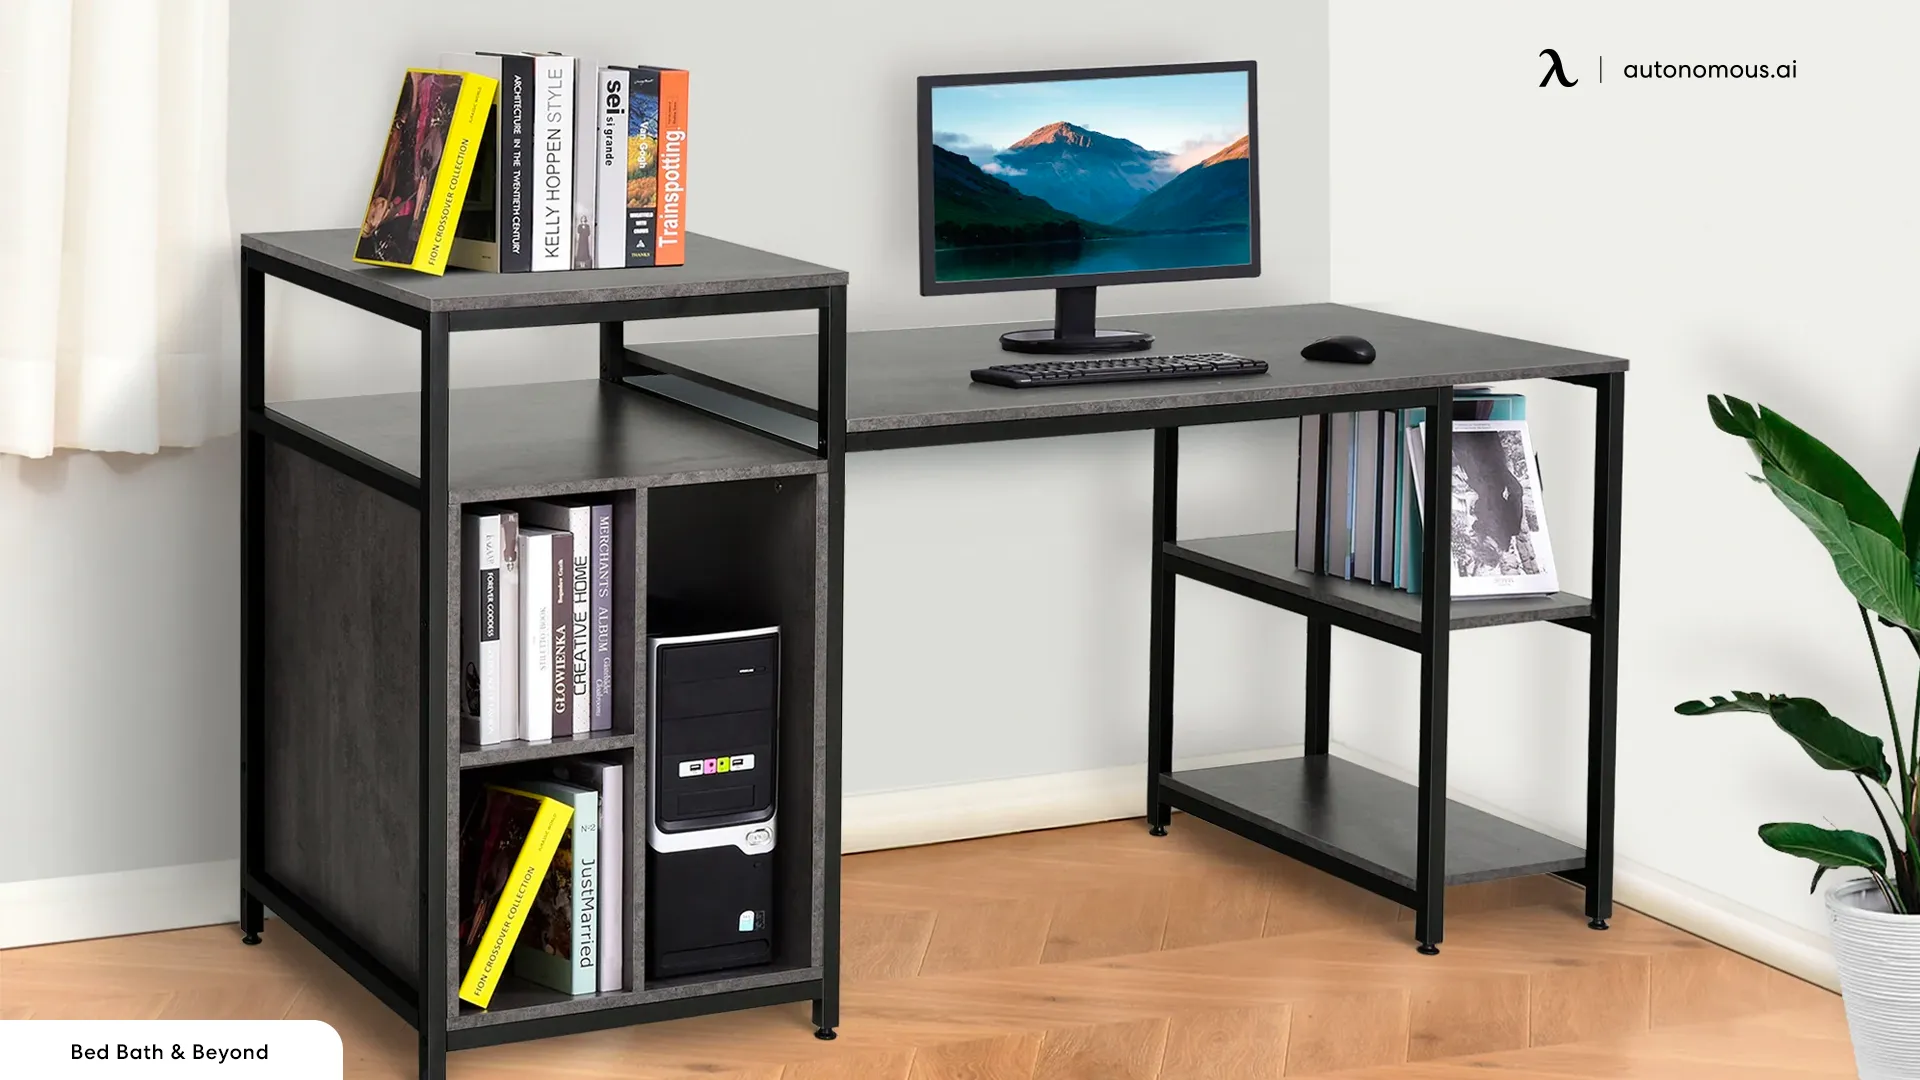 Utilize a Bookshelf or Shelving Unit